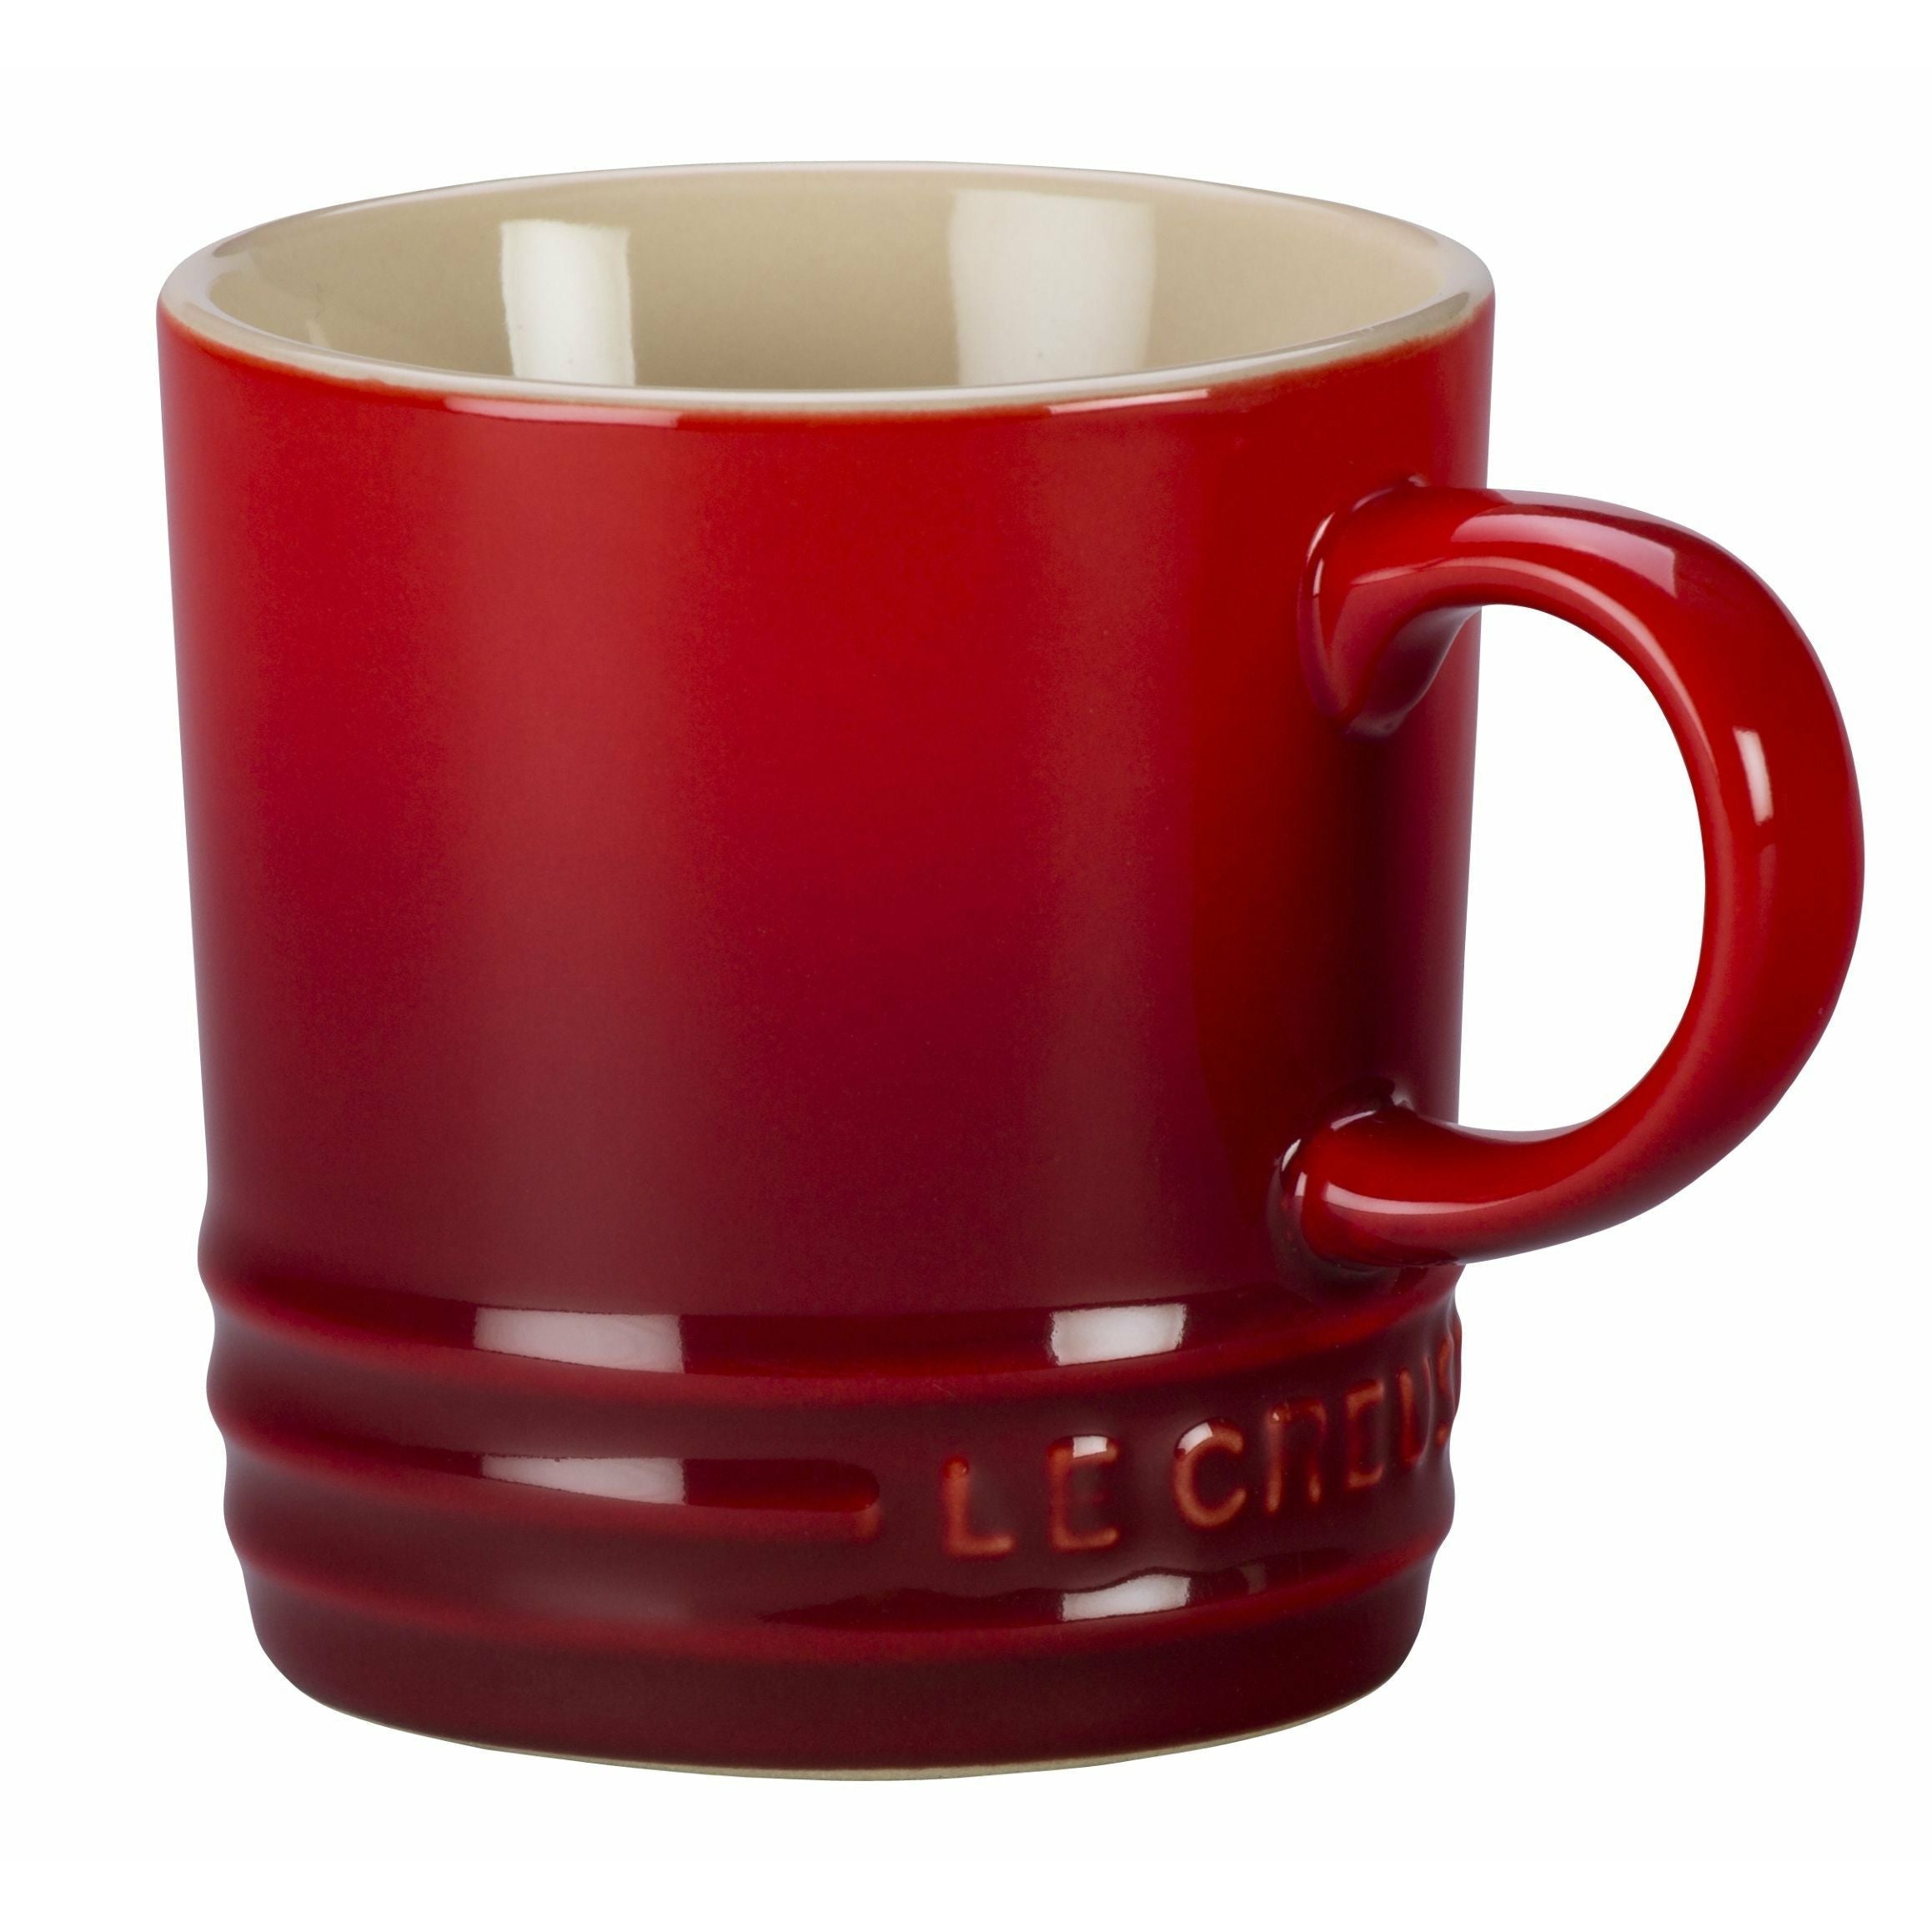 Le Creuset Cappuccino Mug 200 Ml, Cherry Red